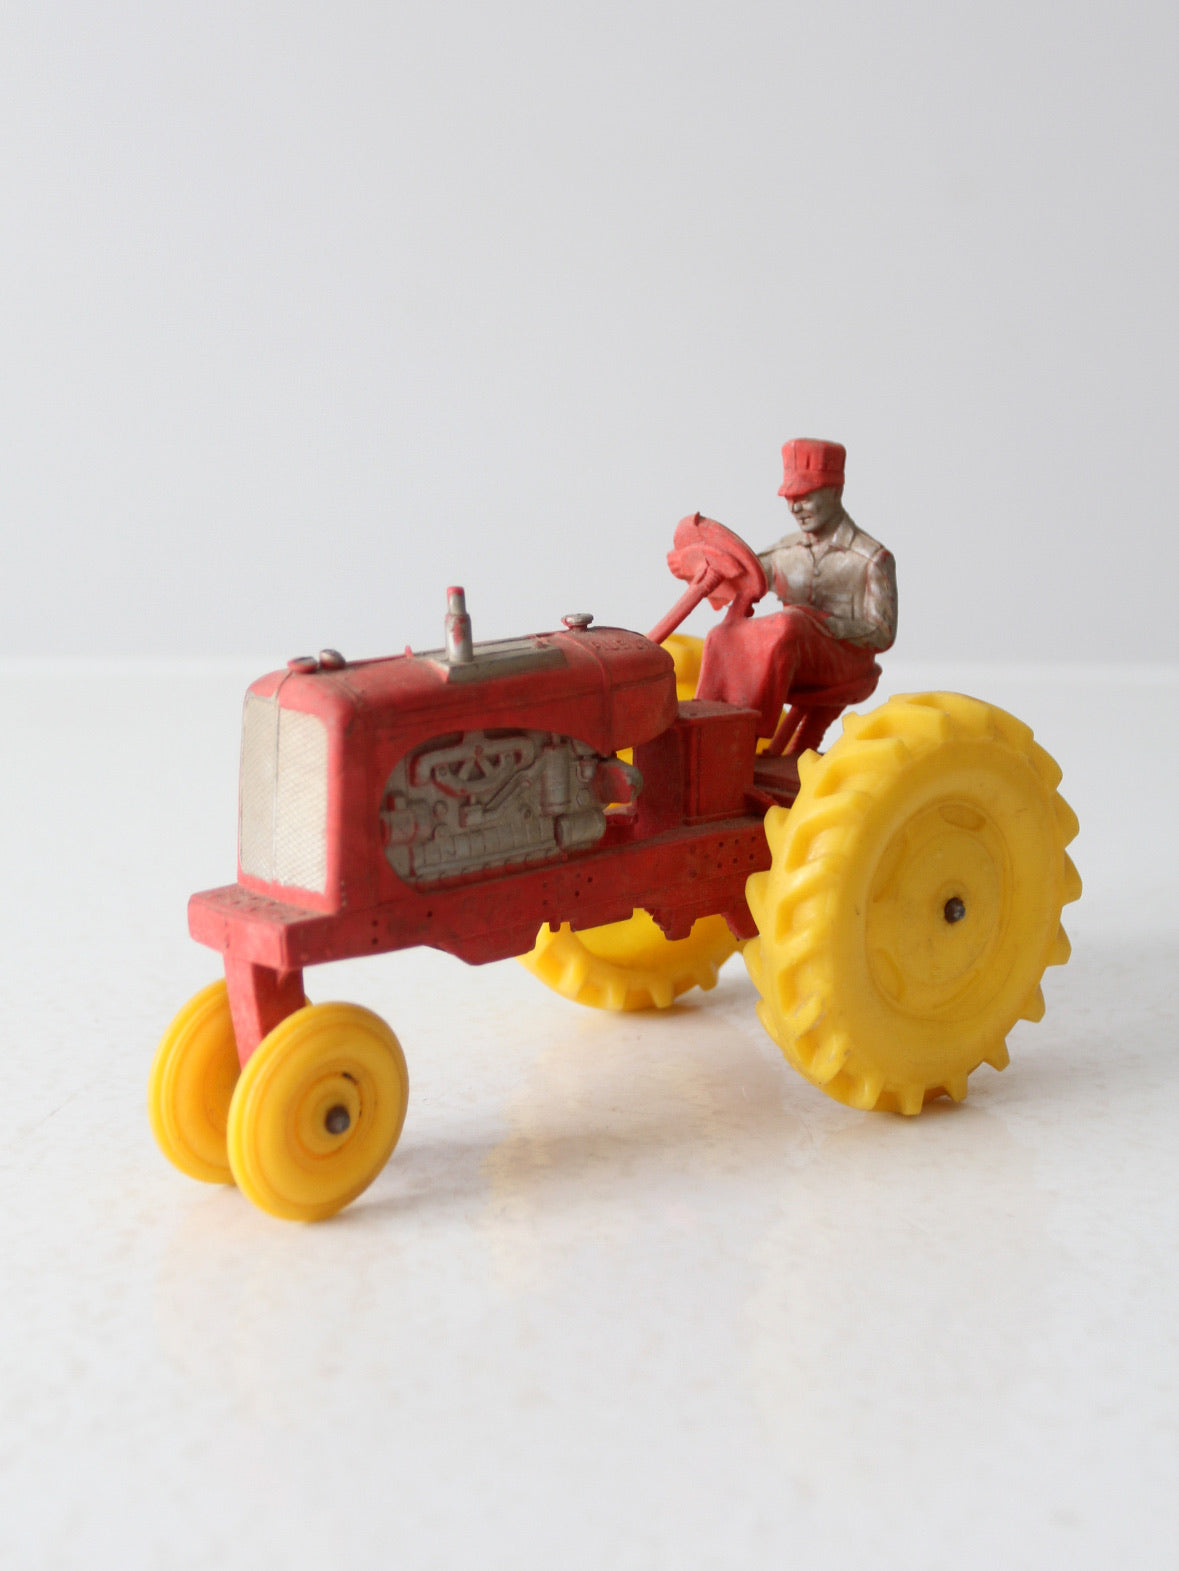 vintage 1950's Auburn Rubber Allis - Chalmers toy tractor